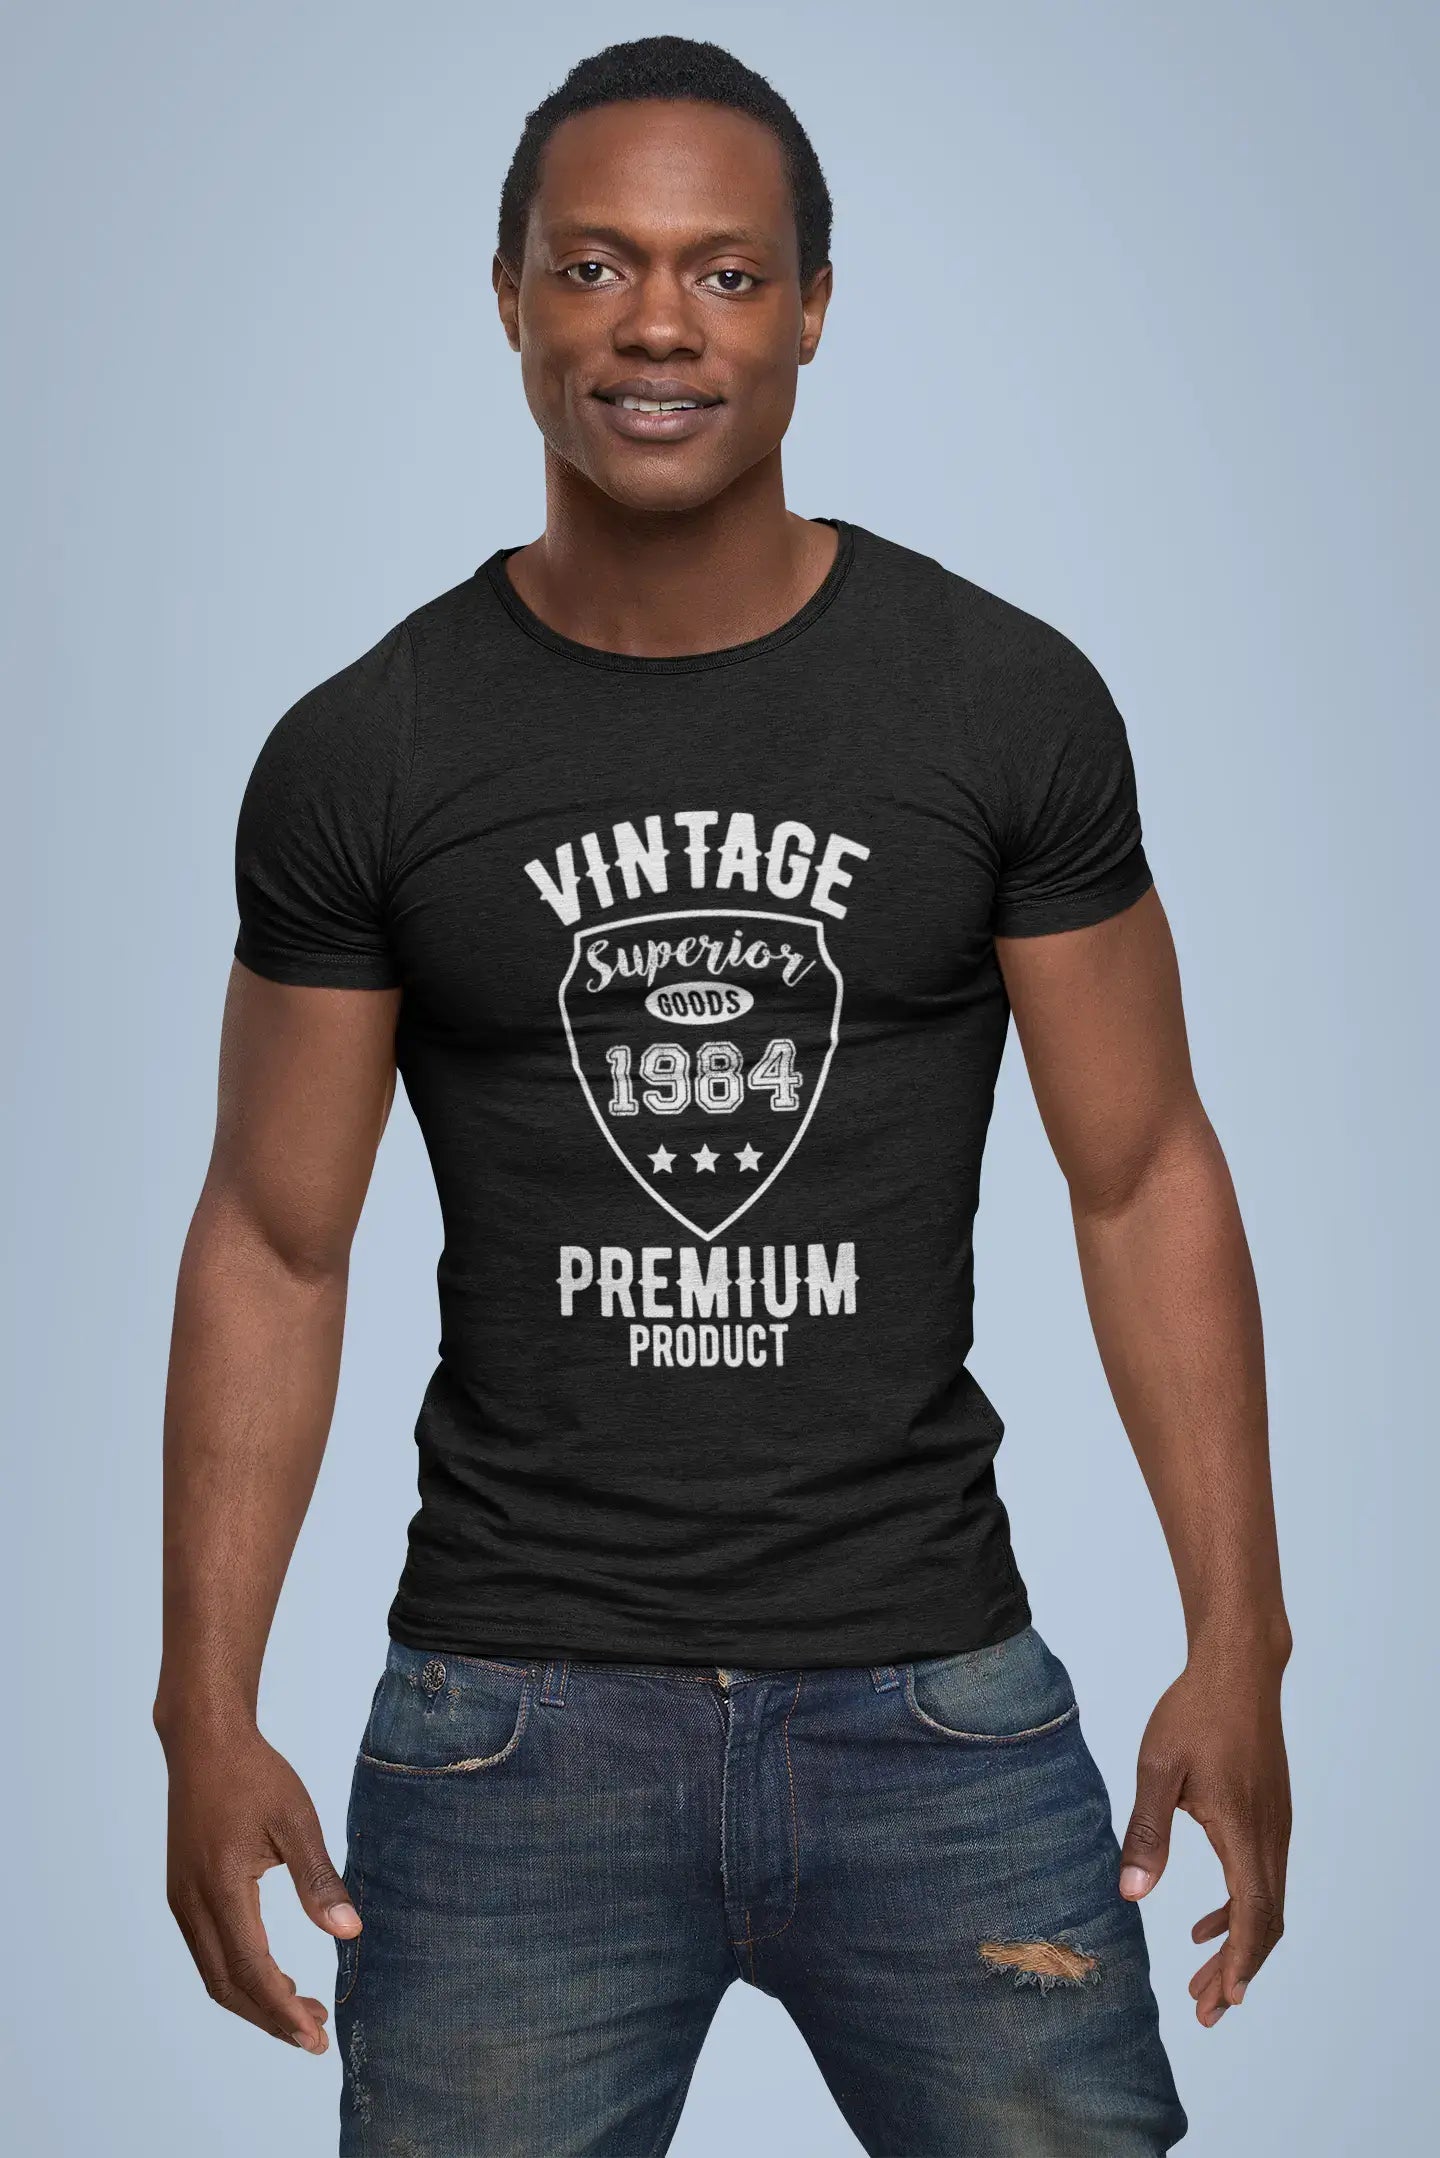 1984 Vintage superior, black, Men's Short Sleeve Round Neck T-shirt 00102